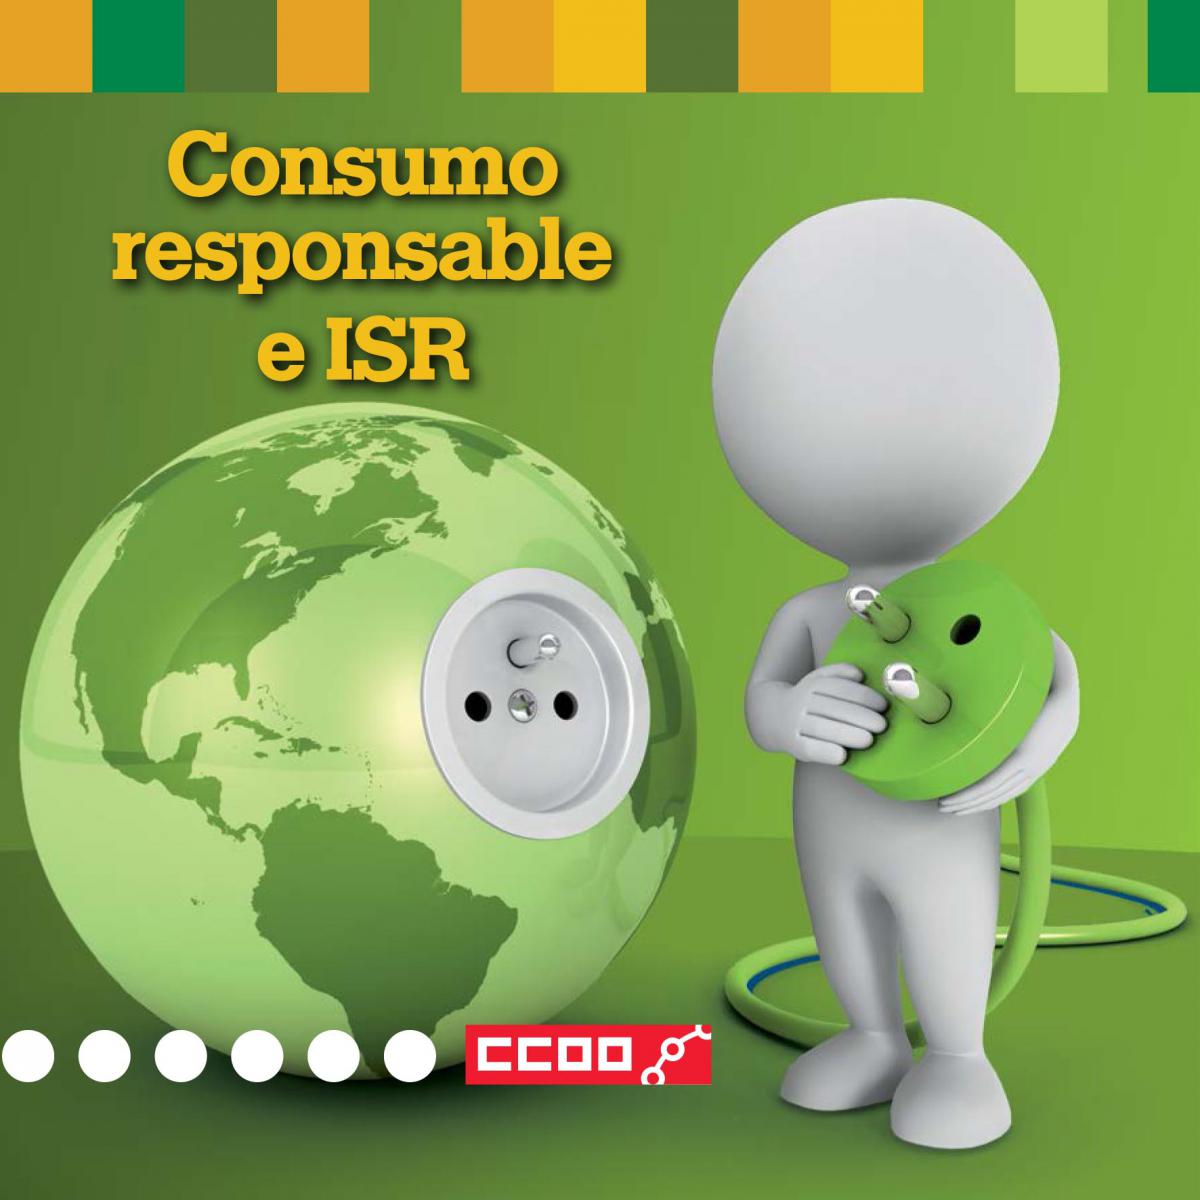 Consumo responsable e ISR